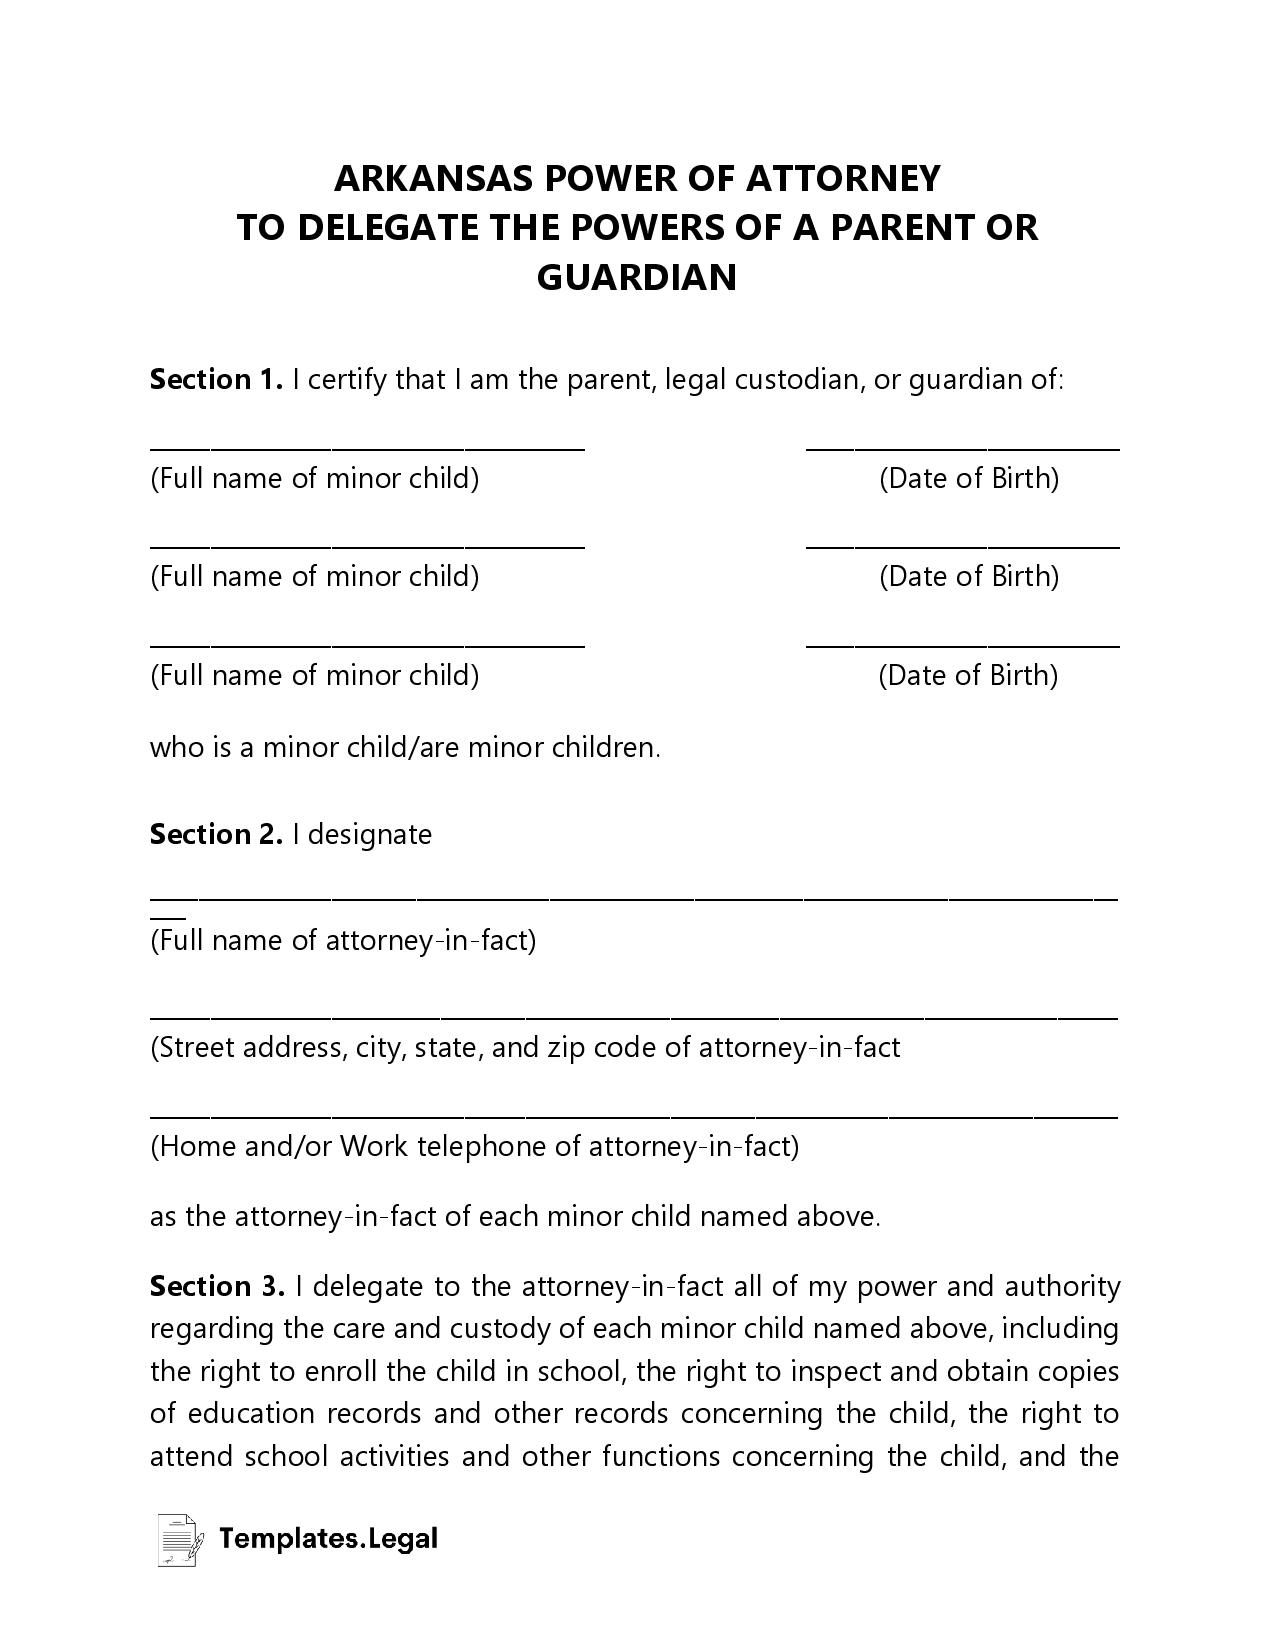 Arkansas Minor (Child) Power of Attorney - Templates.Legal